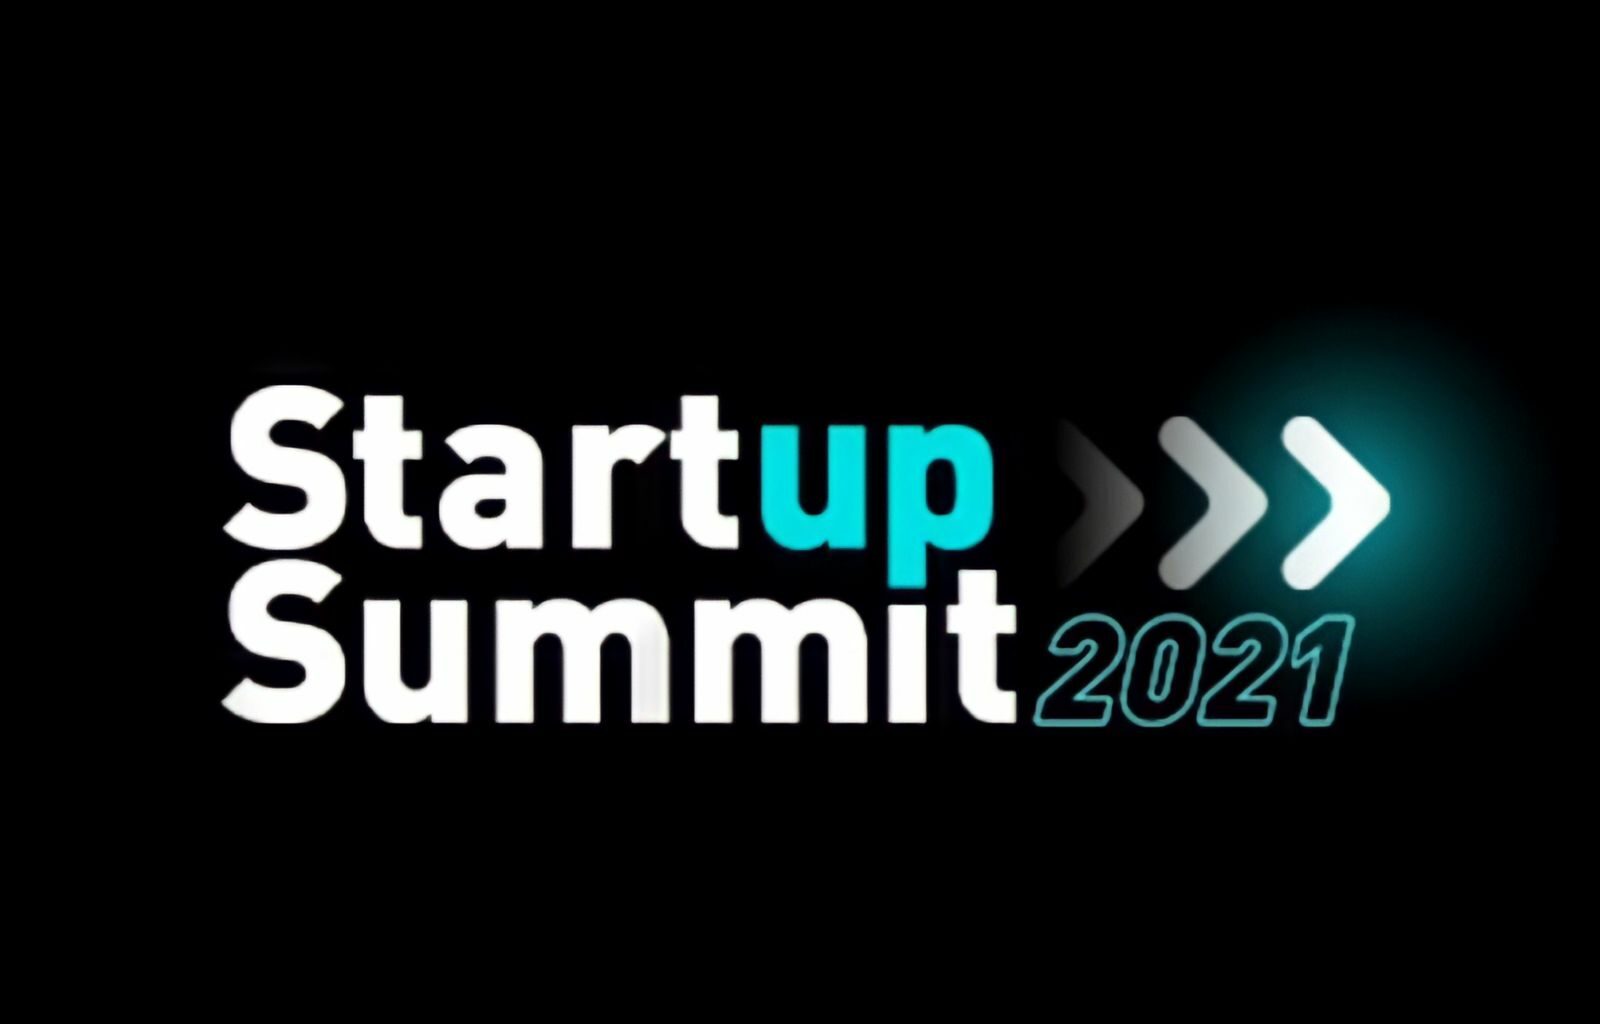 Startup Summit 2021